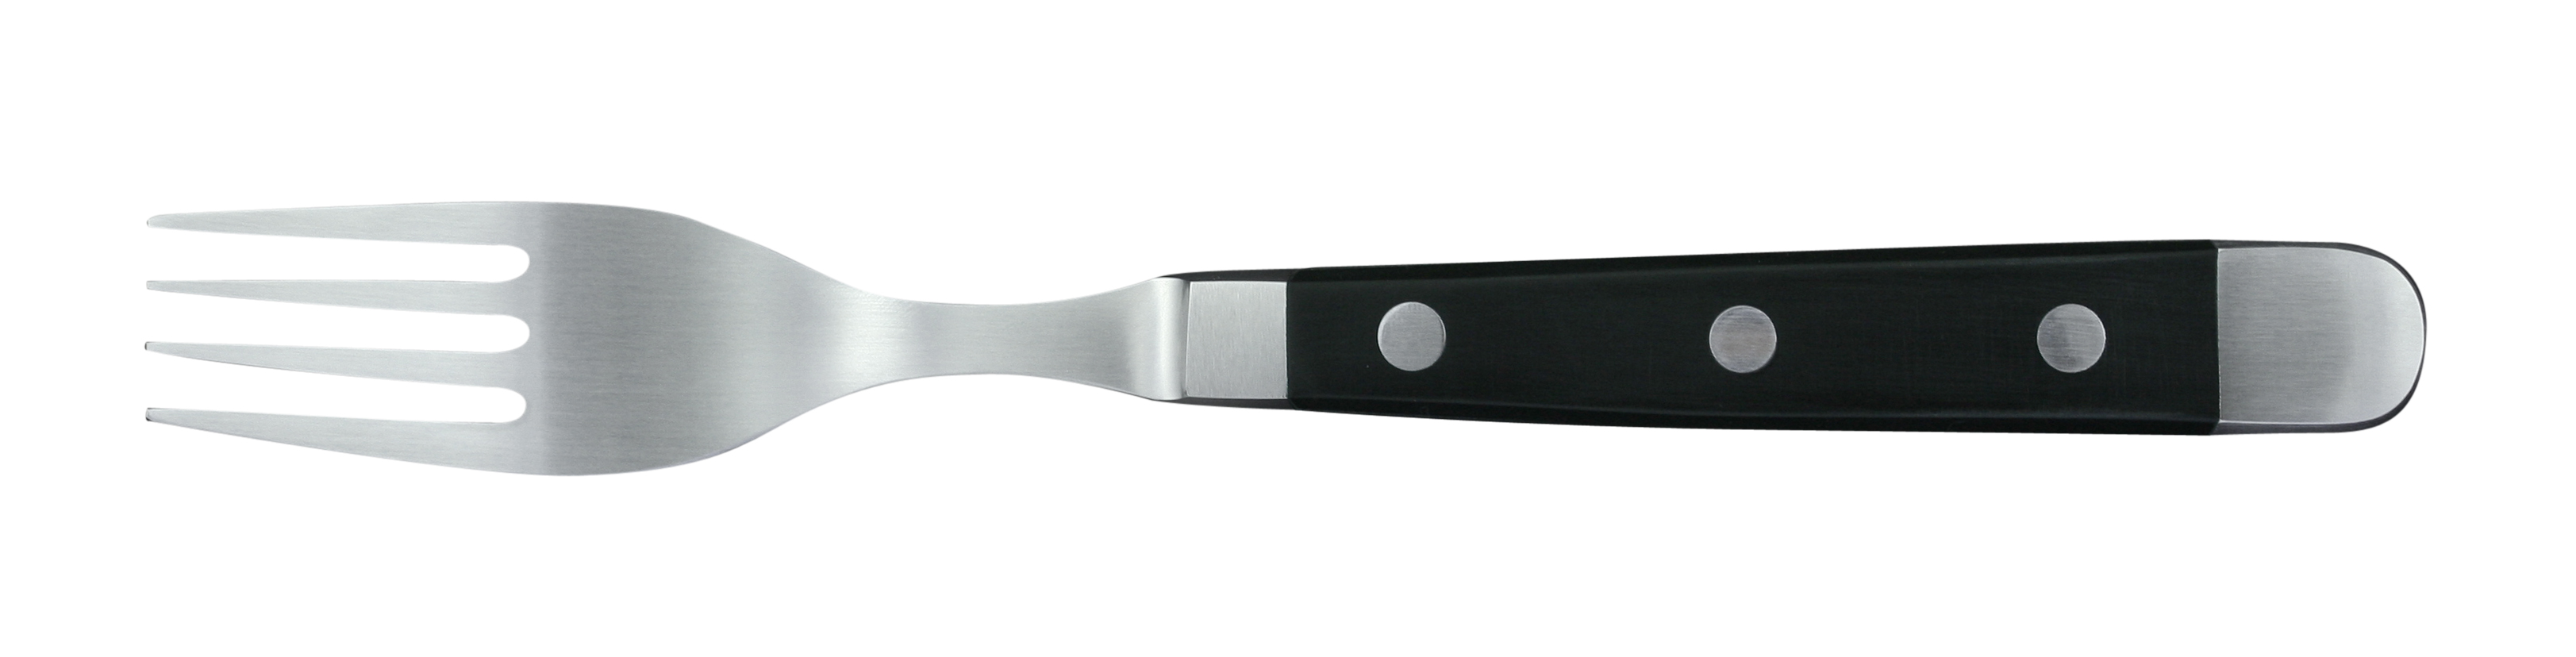 Güde Alpha Tafelgabel 12 cm / CVM-Messerstahl mit Griffschalen aus Hostaform